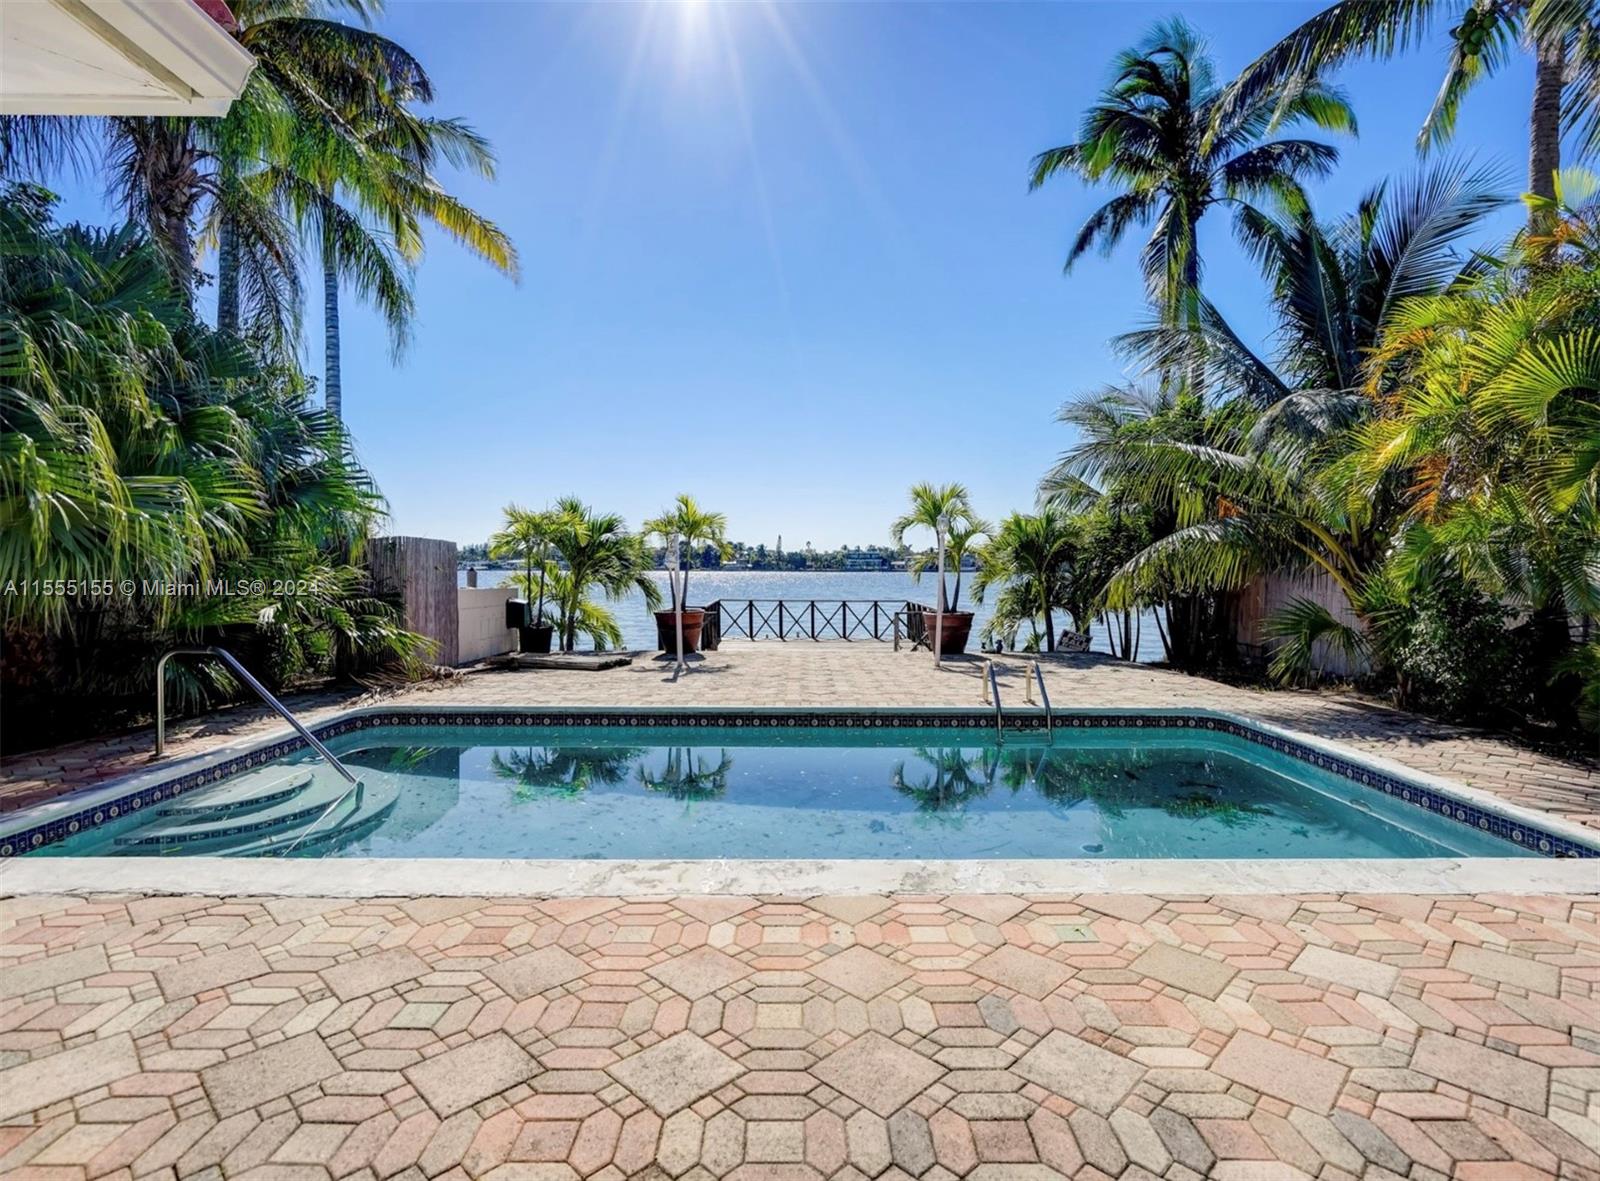 Rental Property at 1520 Stillwater Dr, Miami Beach, Miami-Dade County, Florida - Bedrooms: 4 
Bathrooms: 3  - $10,500 MO.